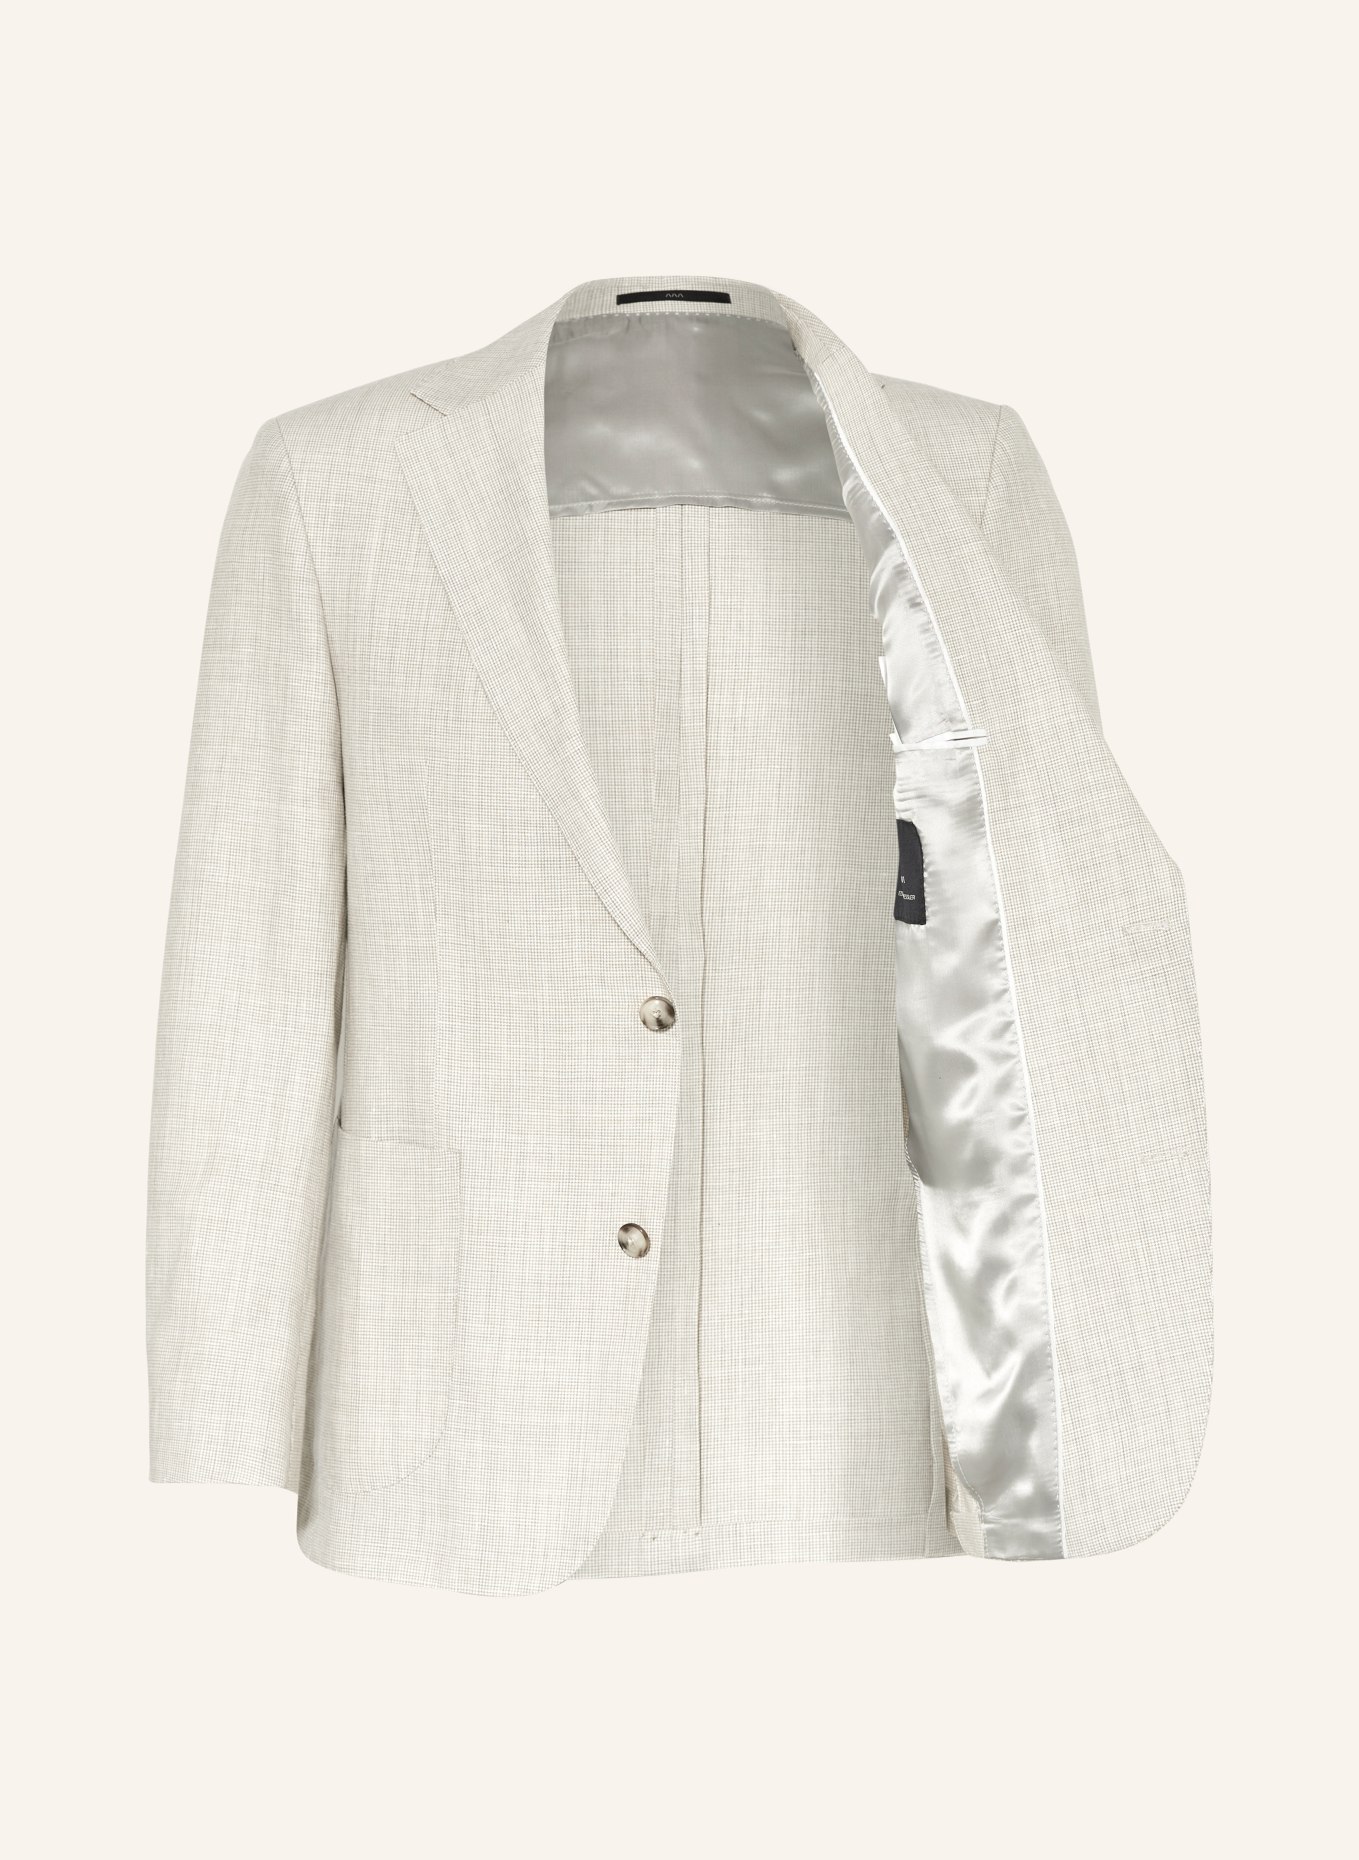 EDUARD DRESSLER Suit jacket MATTEO comfort fit with linen, Color: 070 BEIGE (Image 4)